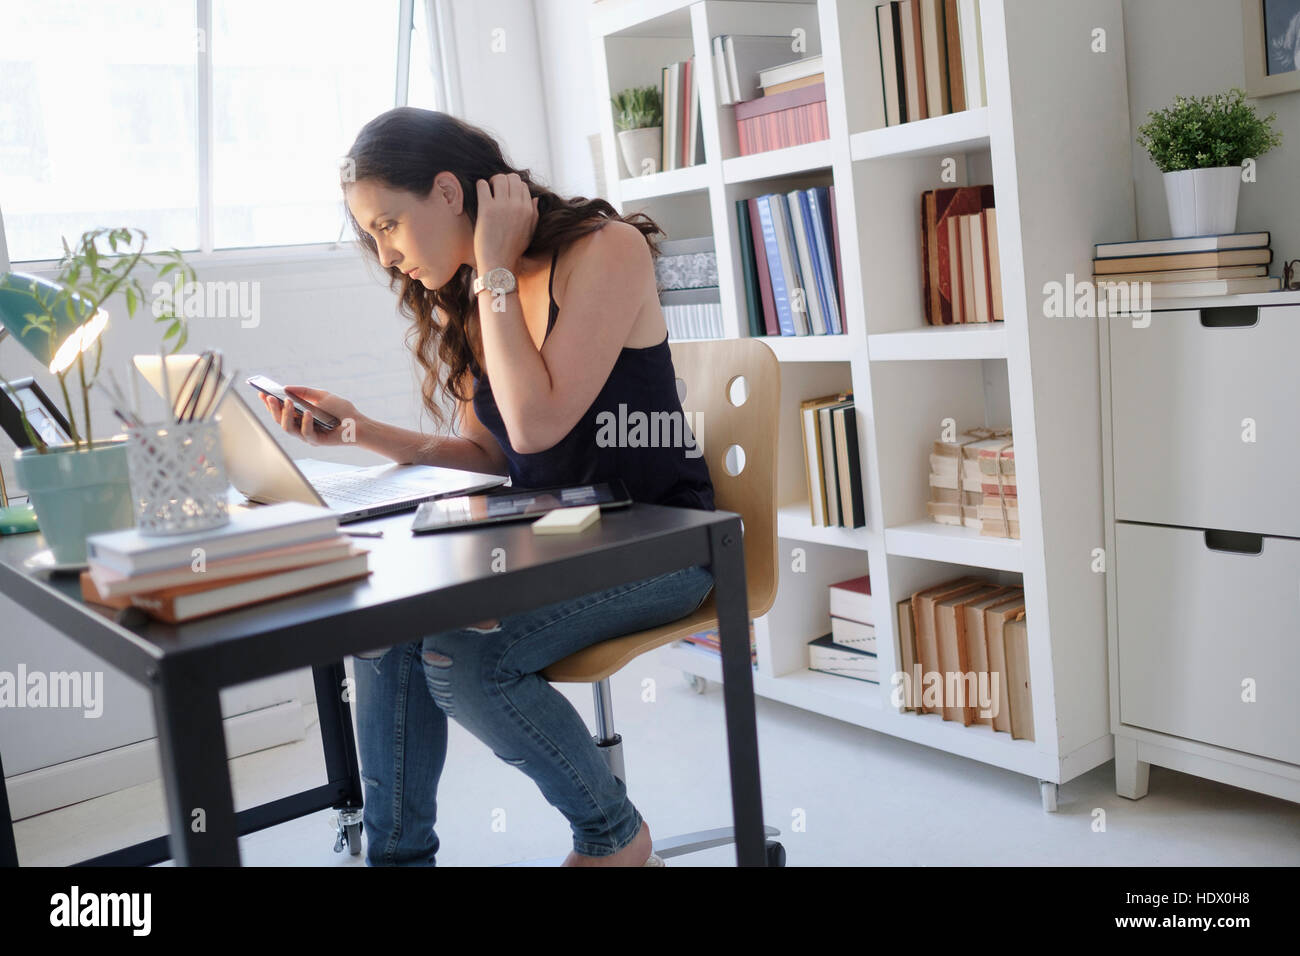 Hispanic businesswoman using technology in office Stock Photo